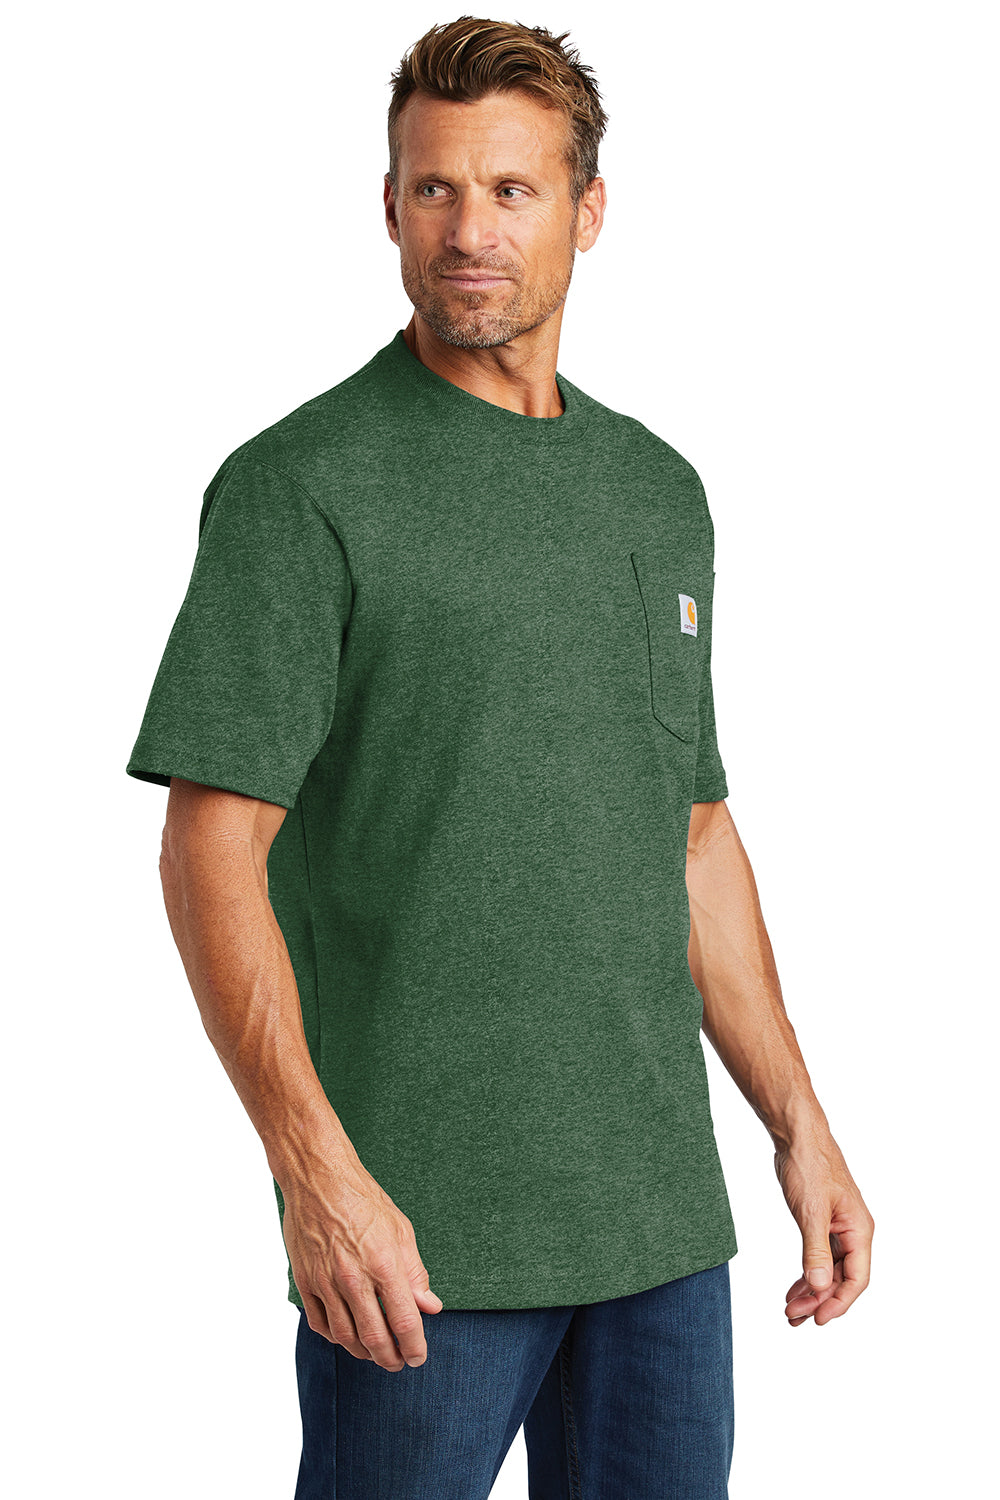 Carhartt CTK87/CTTK87 Mens Workwear Short Sleeve Crewneck T-Shirt w/ Pocket Heather North Woods Green Model 3Q